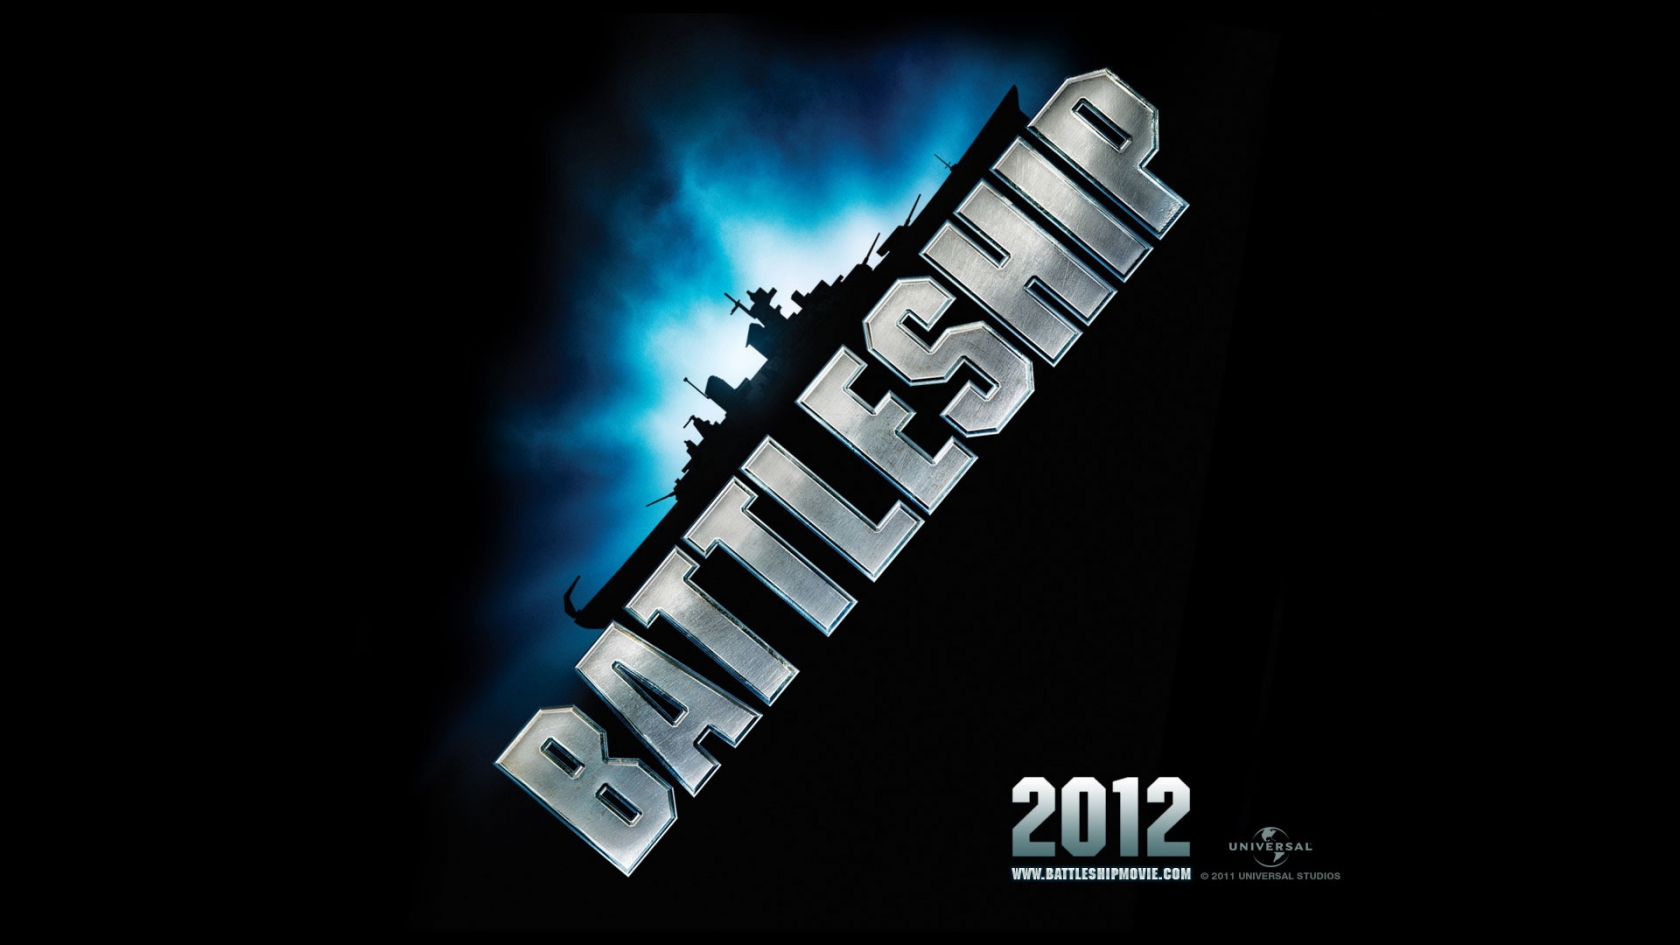 Battleship Movie for 1680 x 945 HDTV resolution